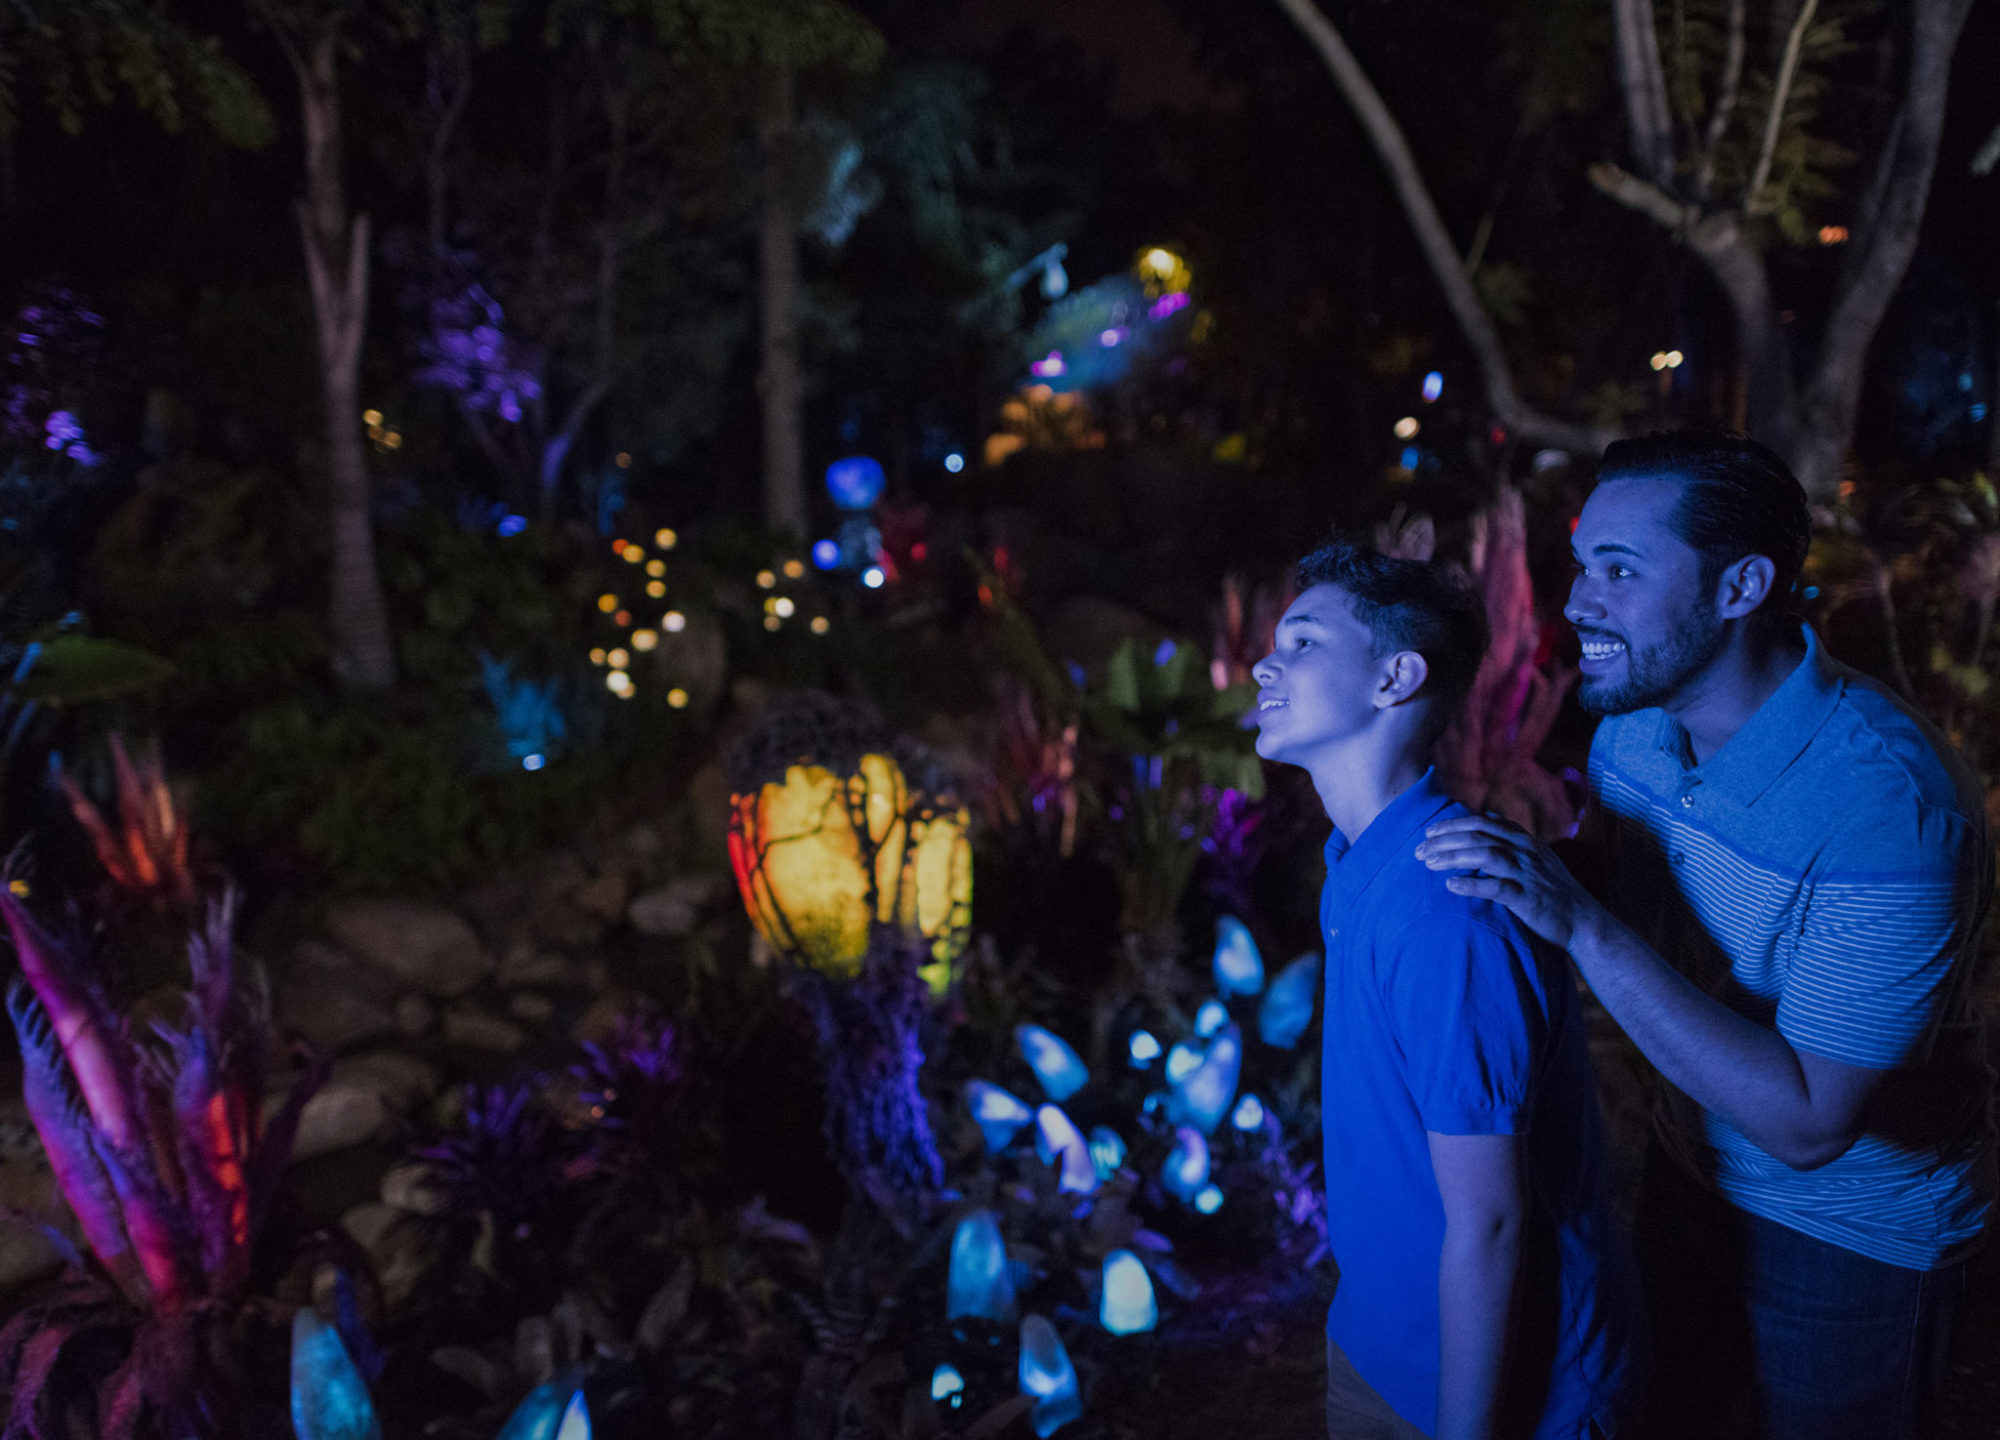 Pandora – The World of Avatar at Disney’s Animal Kingdom